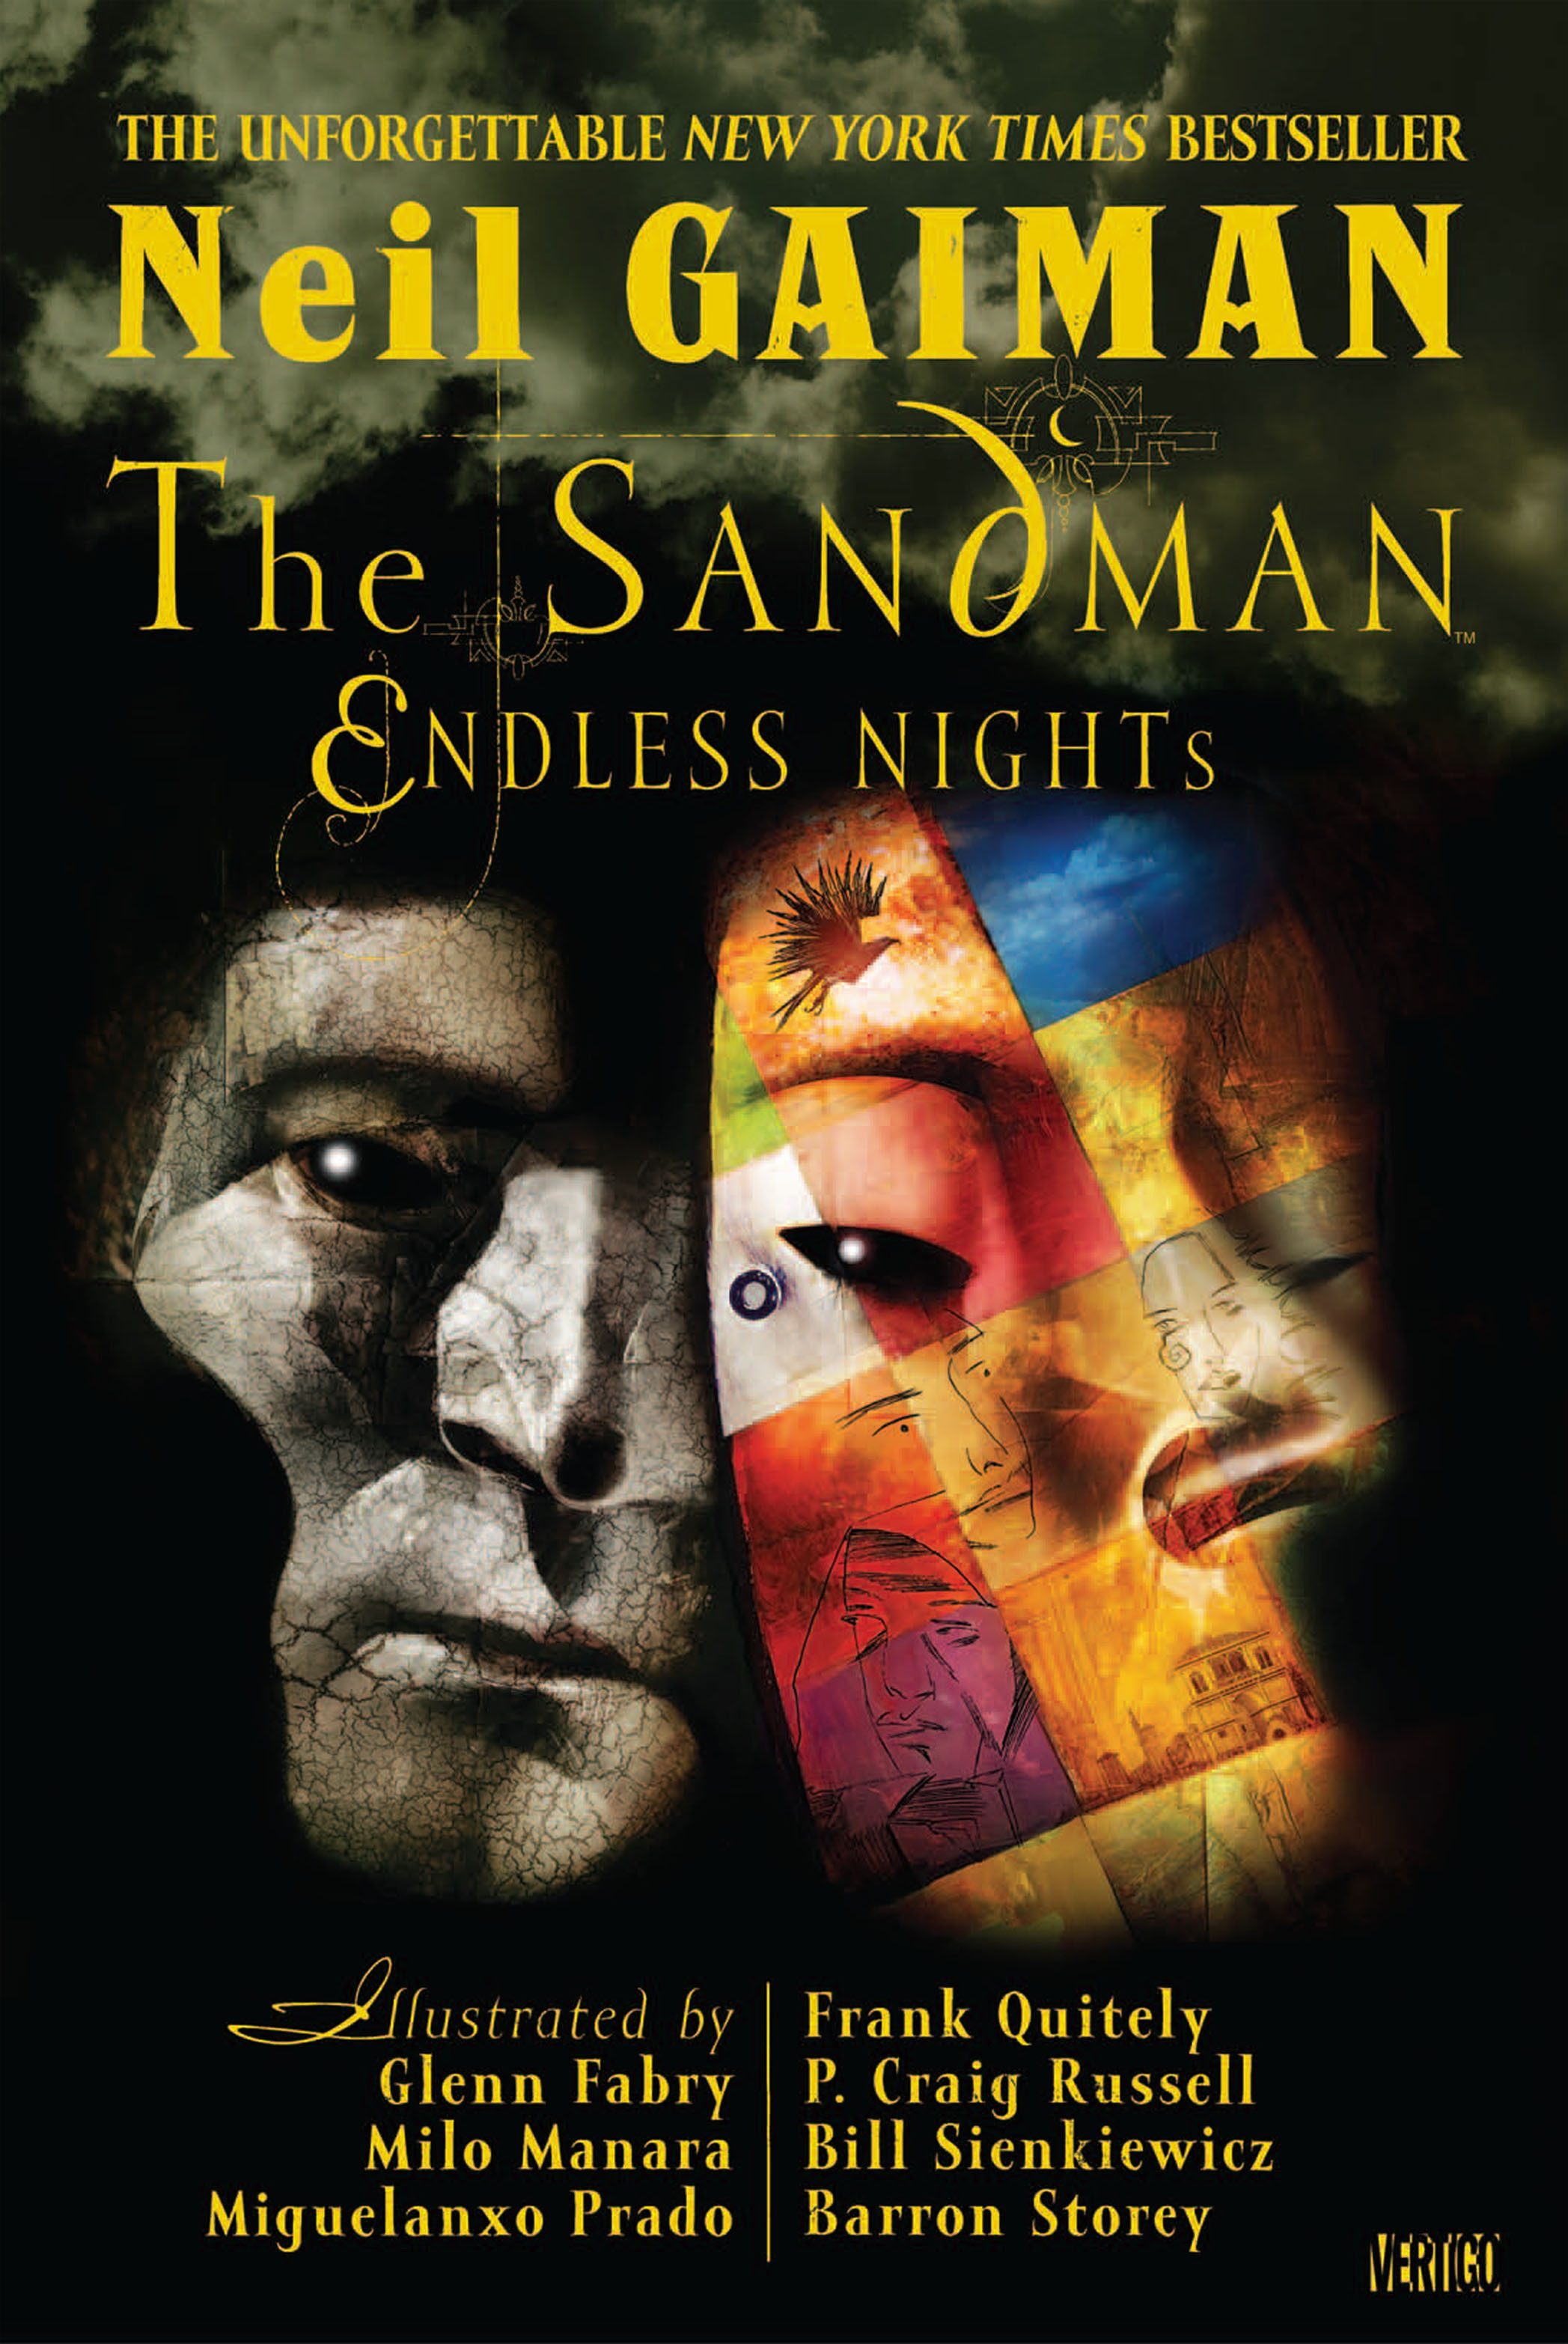 Read online The Sandman: Endless Nights comic -  Issue # Full - 1